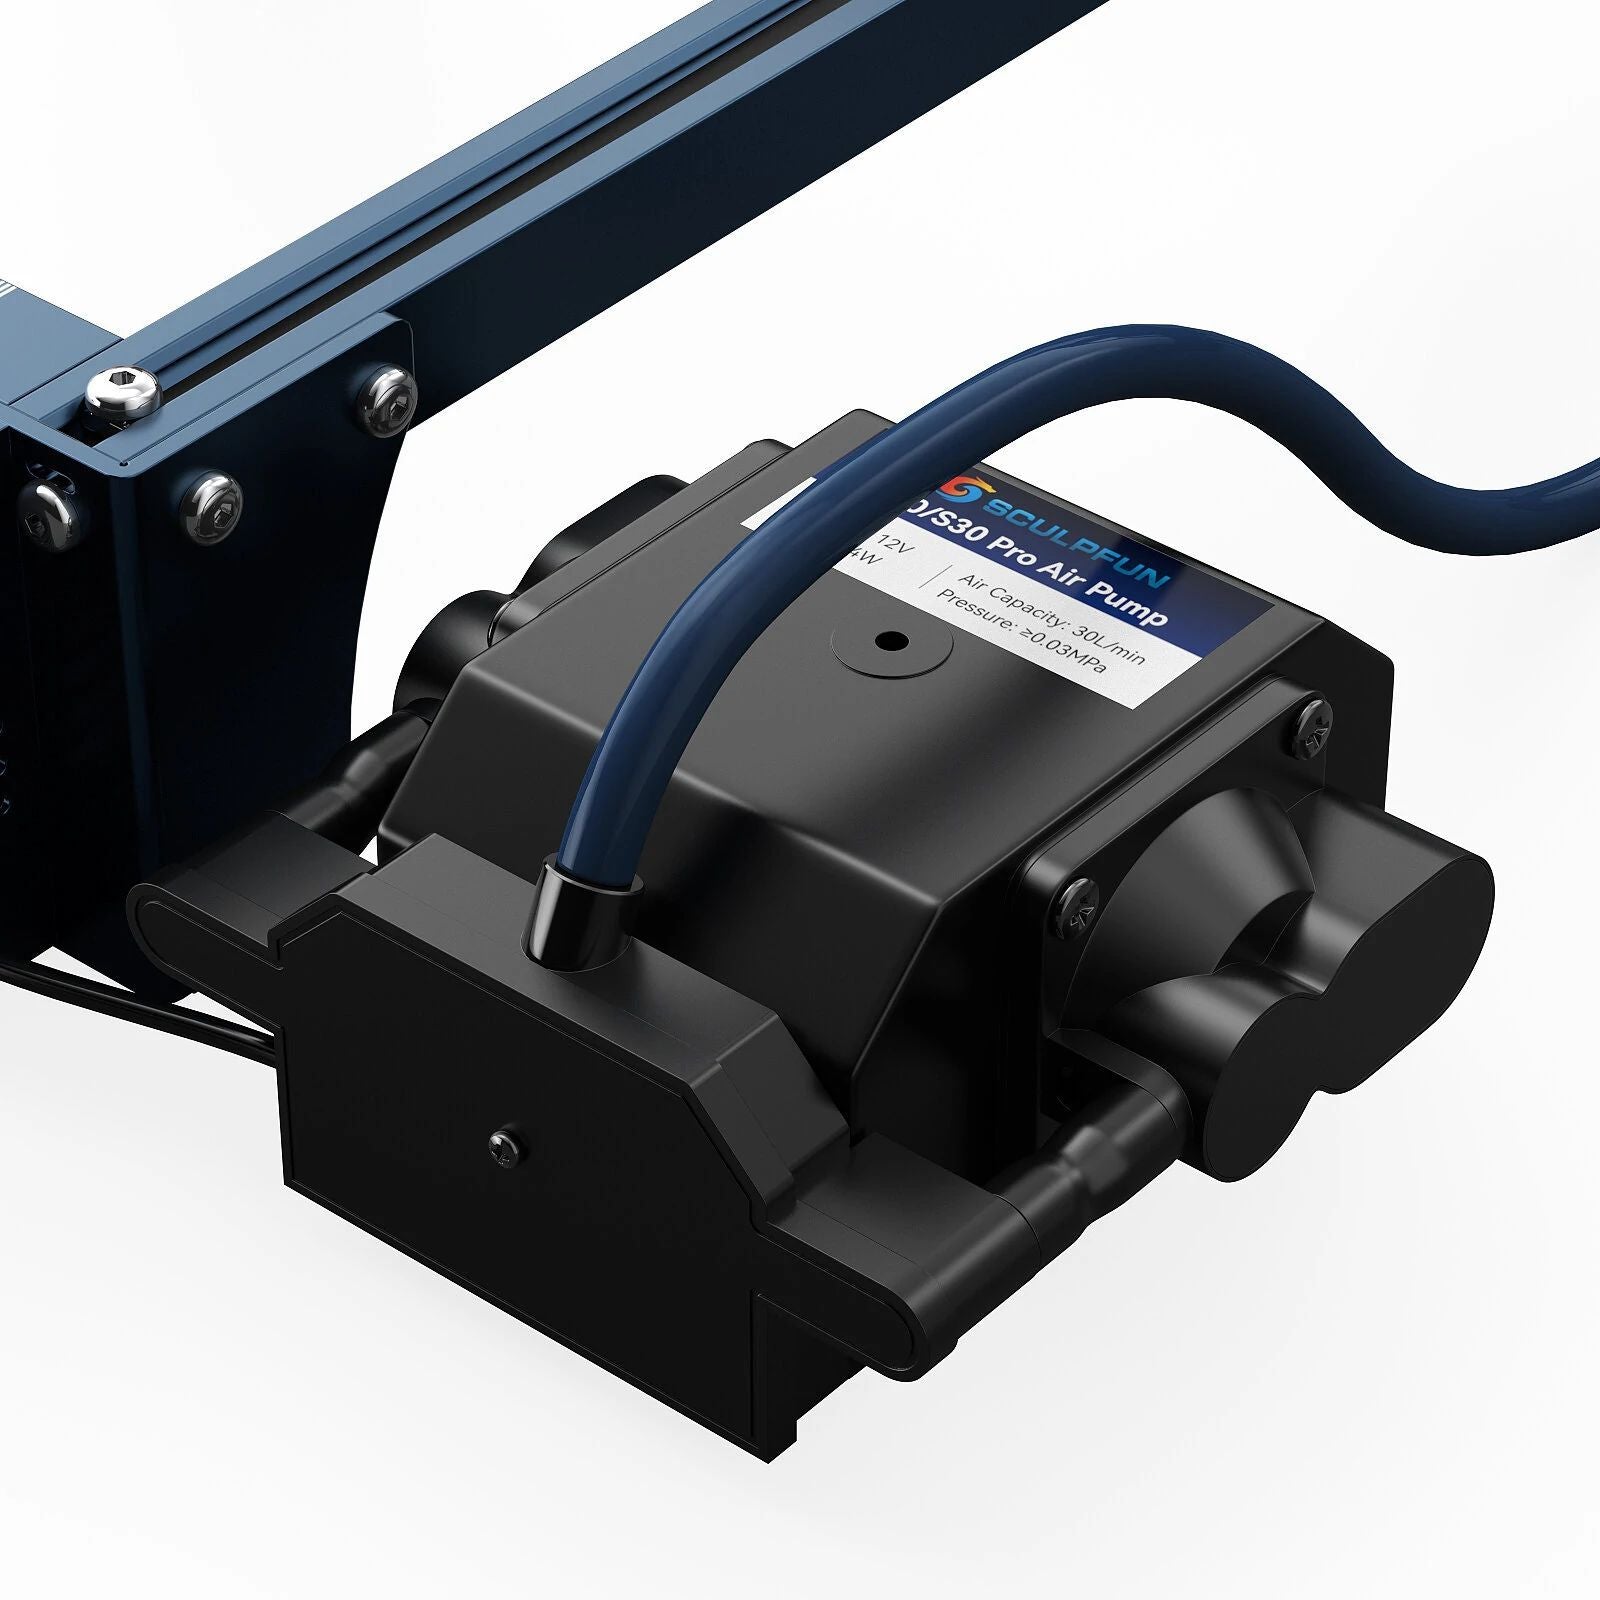 SCULPFUN S30 PRO 10W Laser Engraver Cutter Automatic Air-assist 32-bit Motherboard Replaceable Lens support Expandable 935x905mm